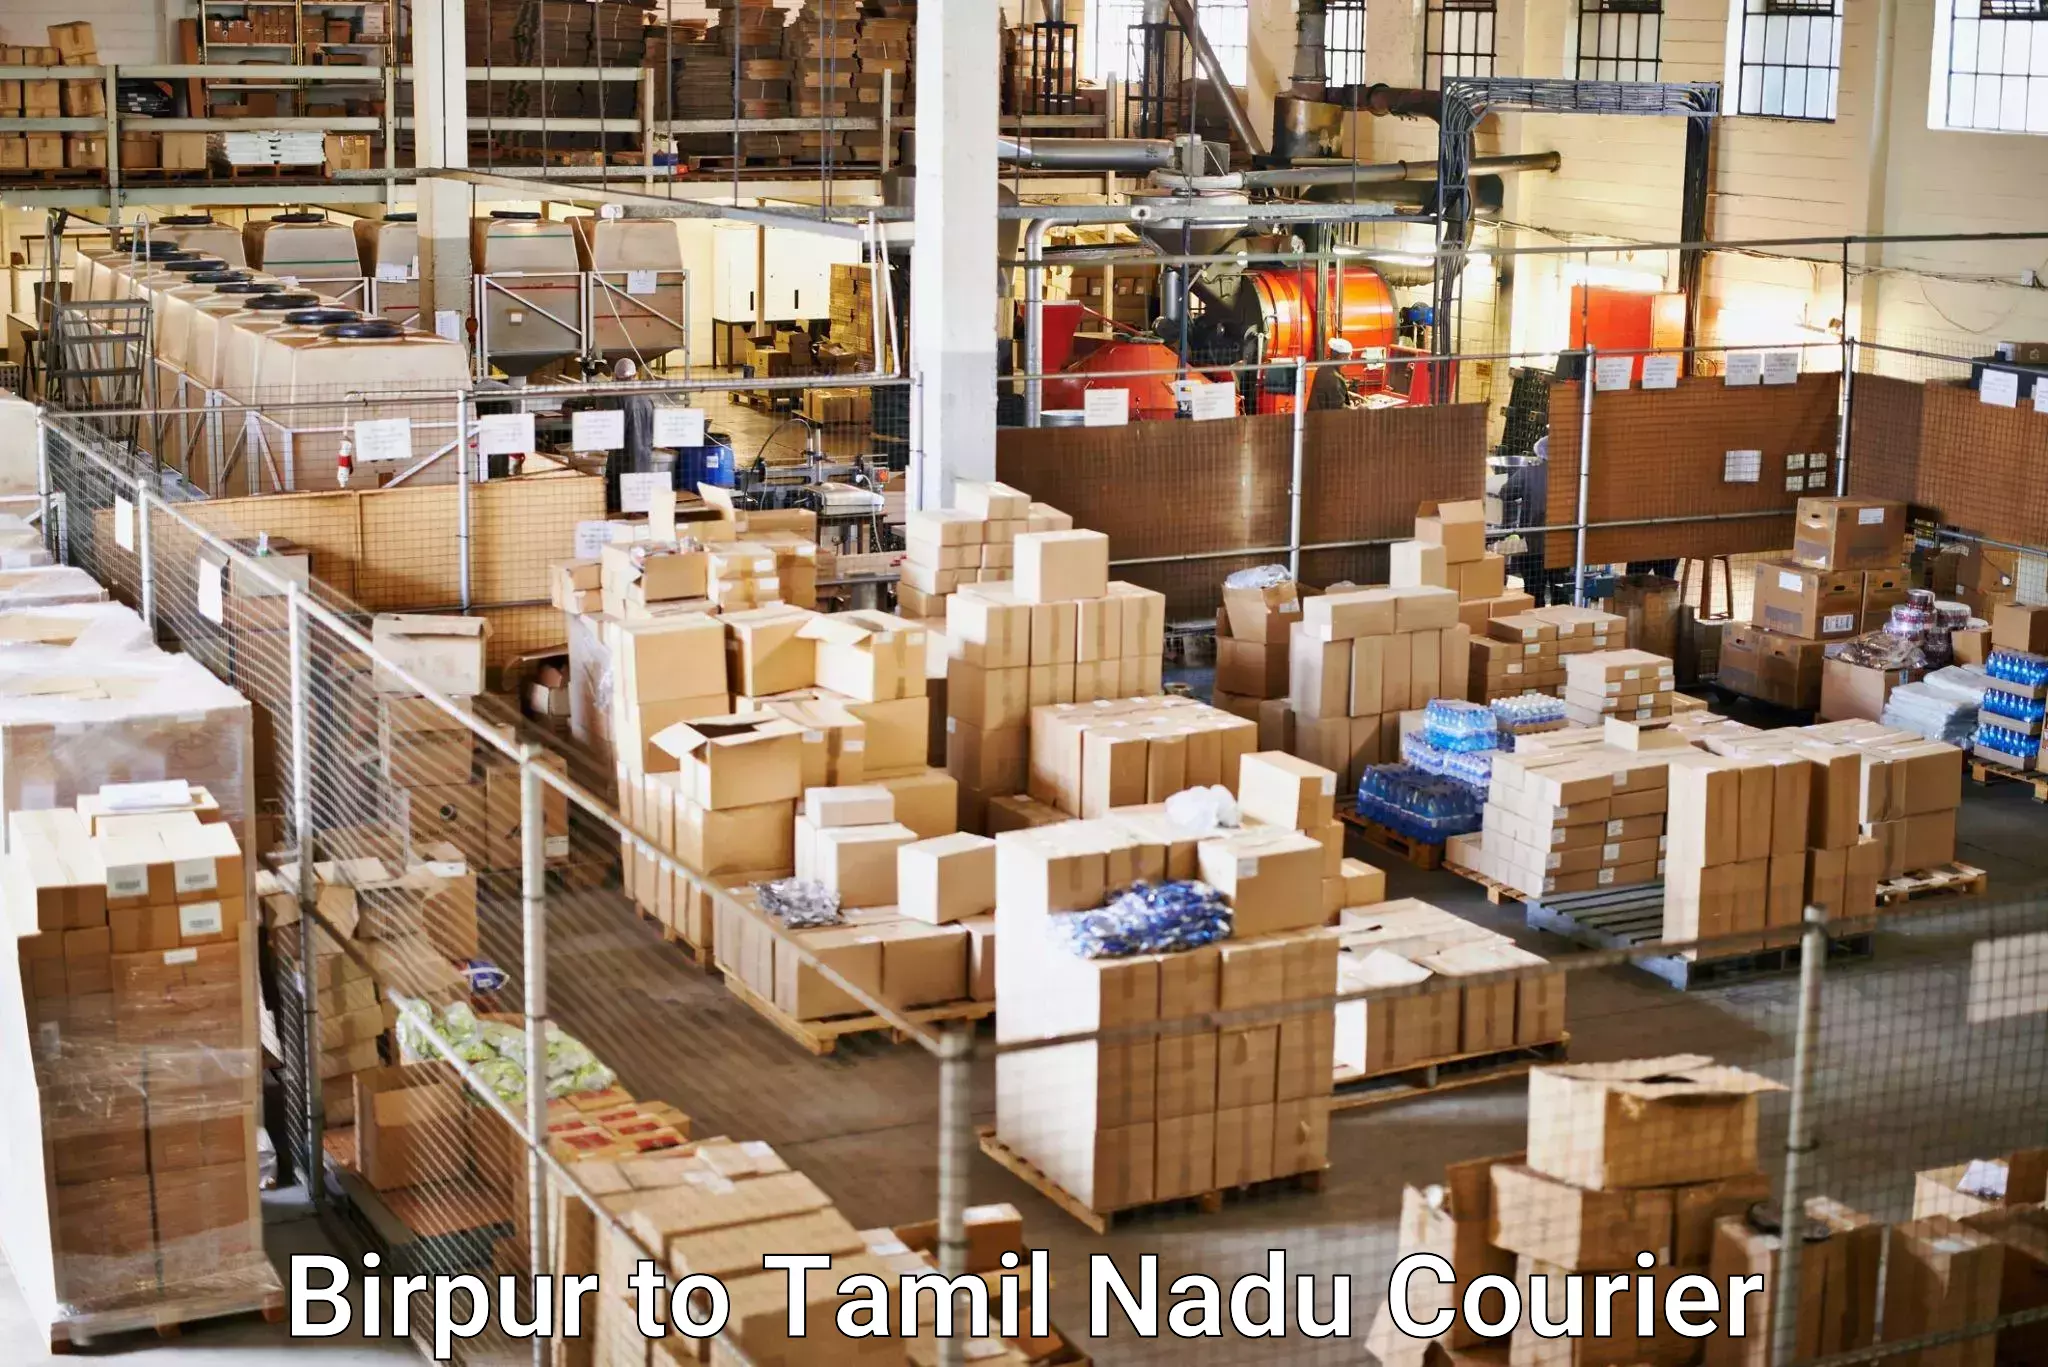 Logistics service provider Birpur to Tamil Nadu